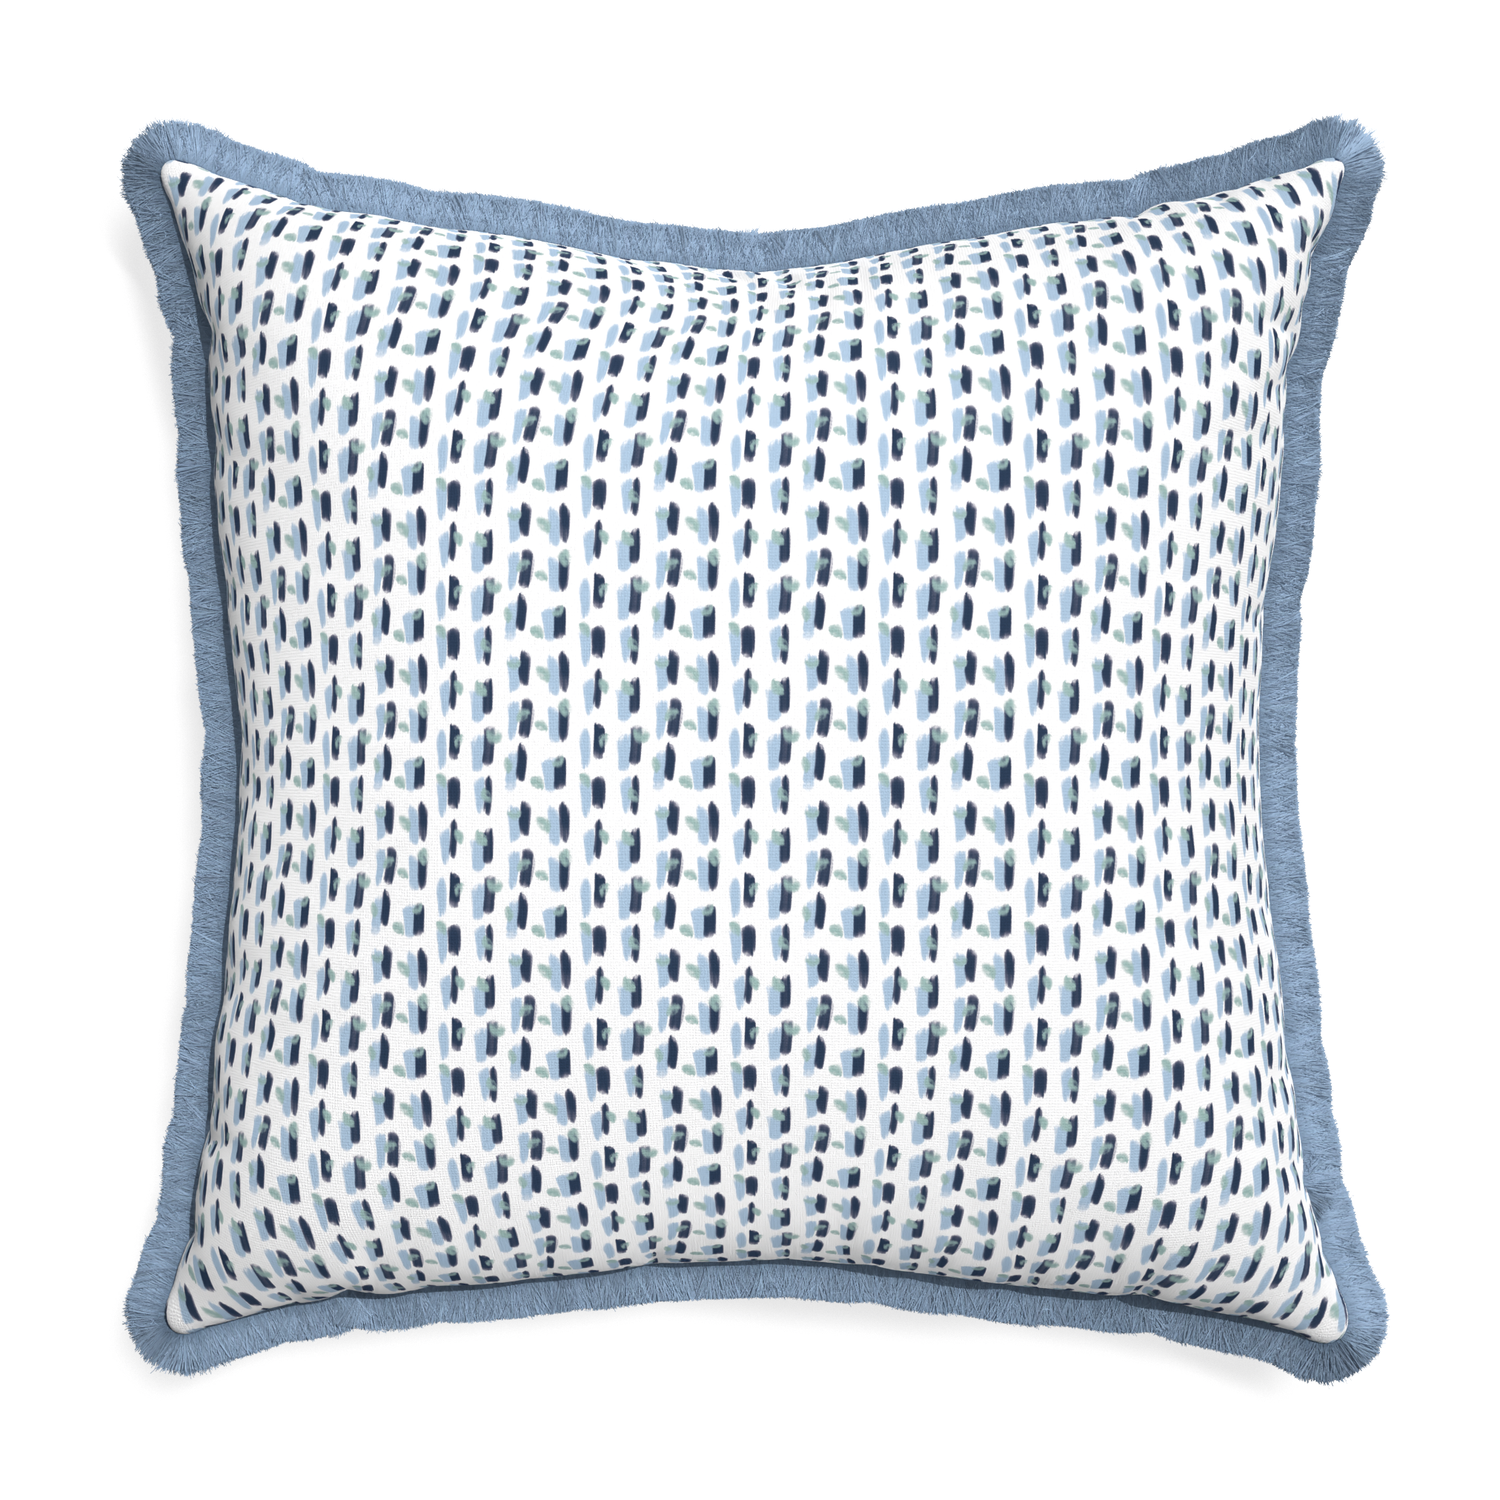 Euro-sham poppy blue custom pillow with sky fringe on white background